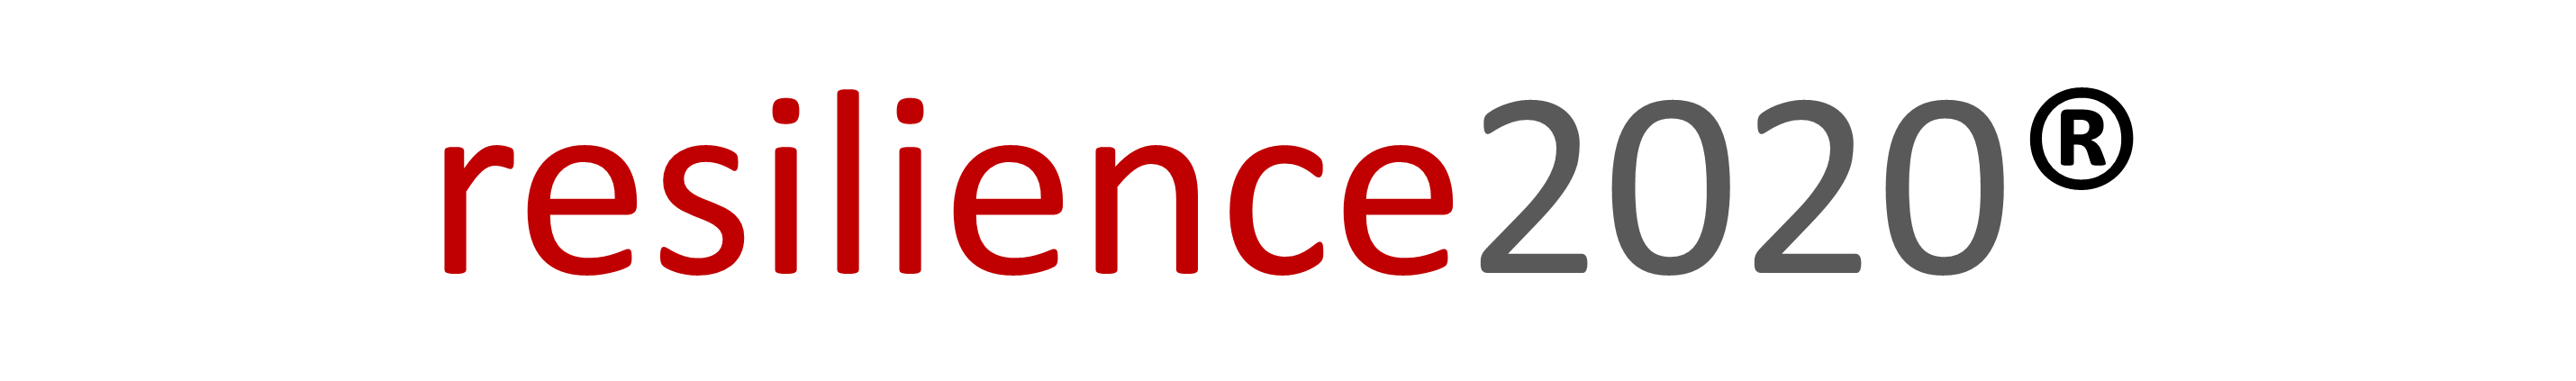 resilience2020 Inc Logo